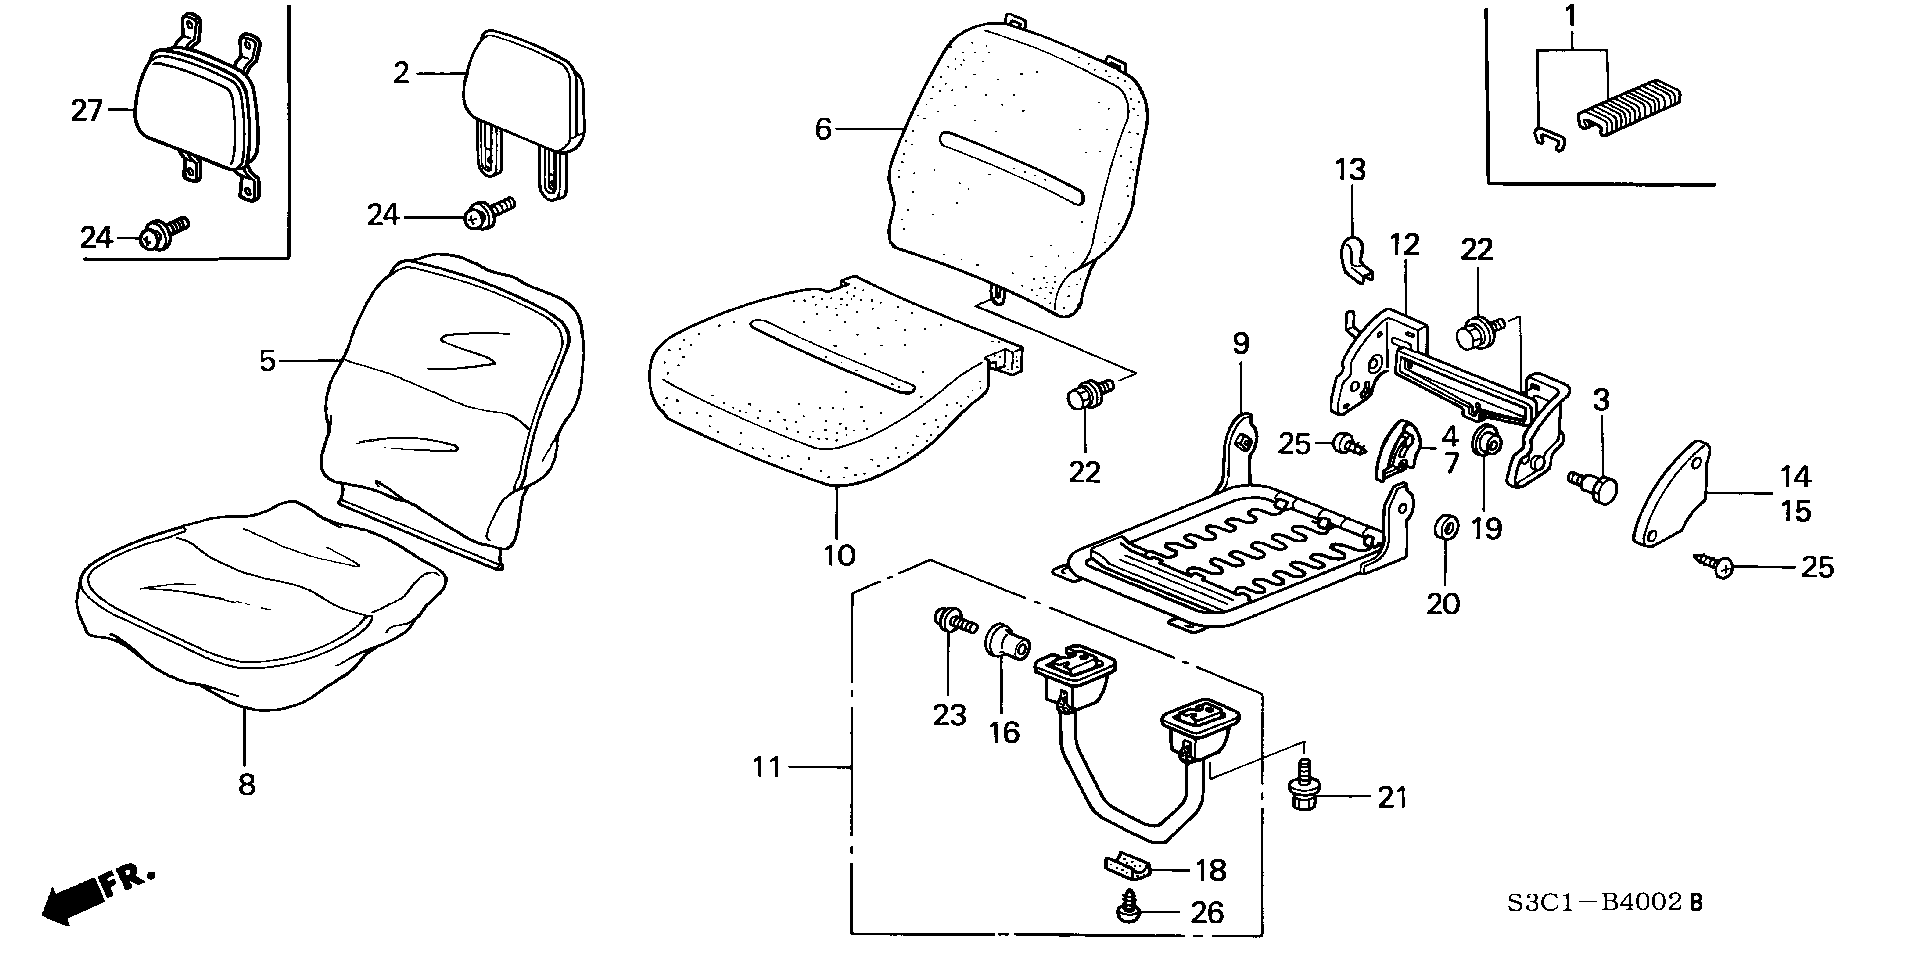 FRONT SEAT(  PASSENGER'S SEAT SIDE ) (PRO-B,SANIKS,  POSTAL. DIRECTION )